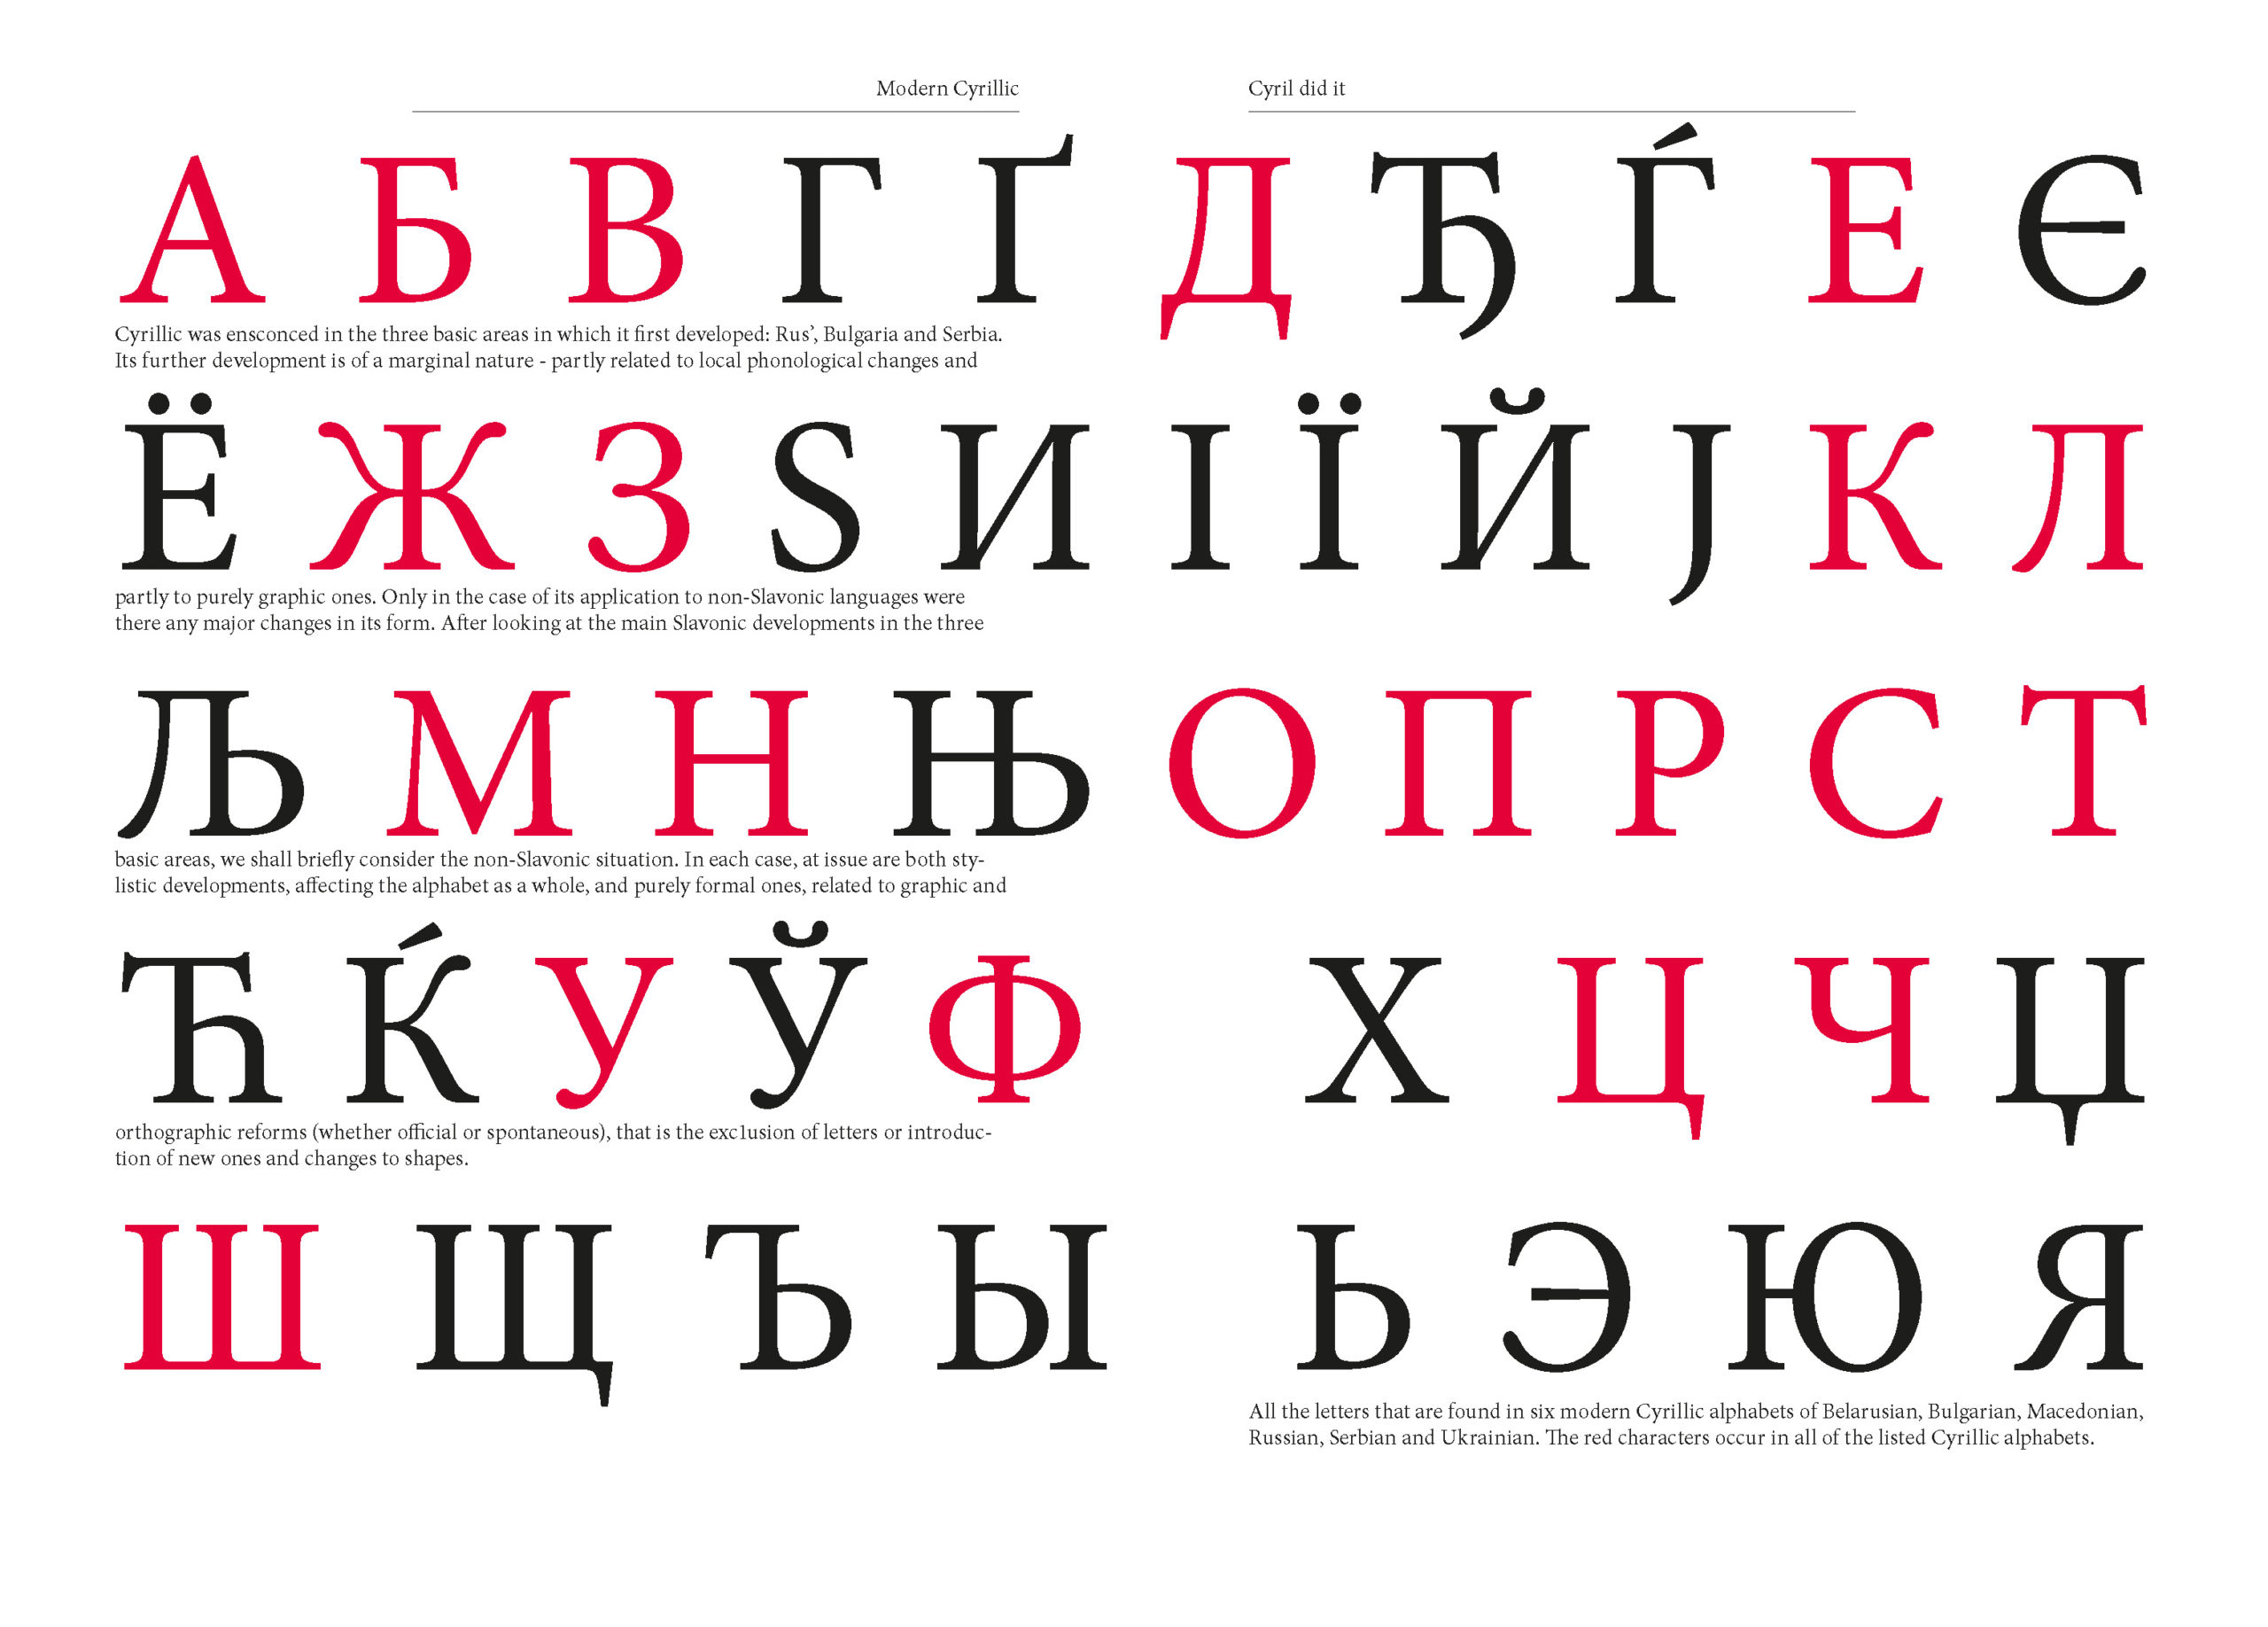 A Short History Of The Cyrillic Alphabet